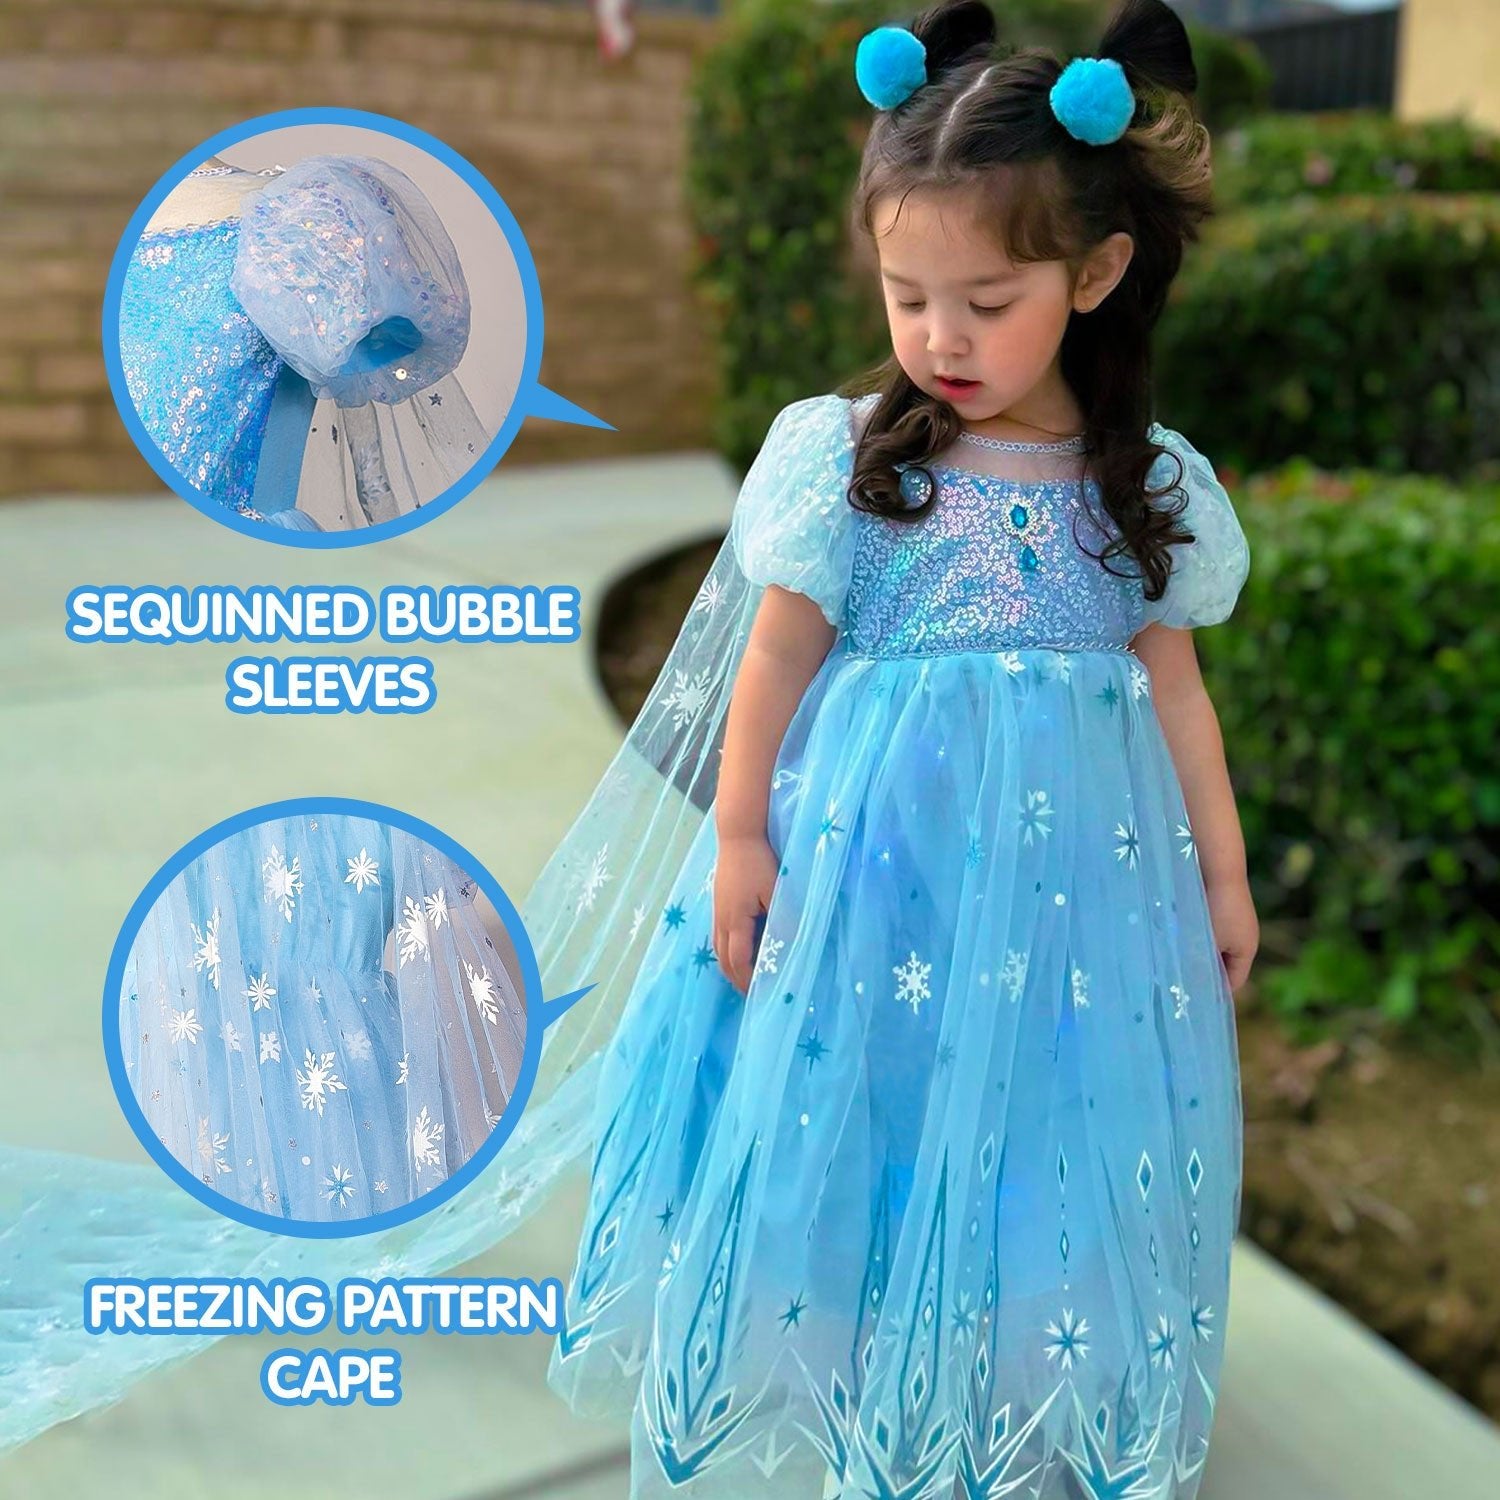 Light up Princess Costumes for Little Girls Elsa - Uporpor - Uporpor